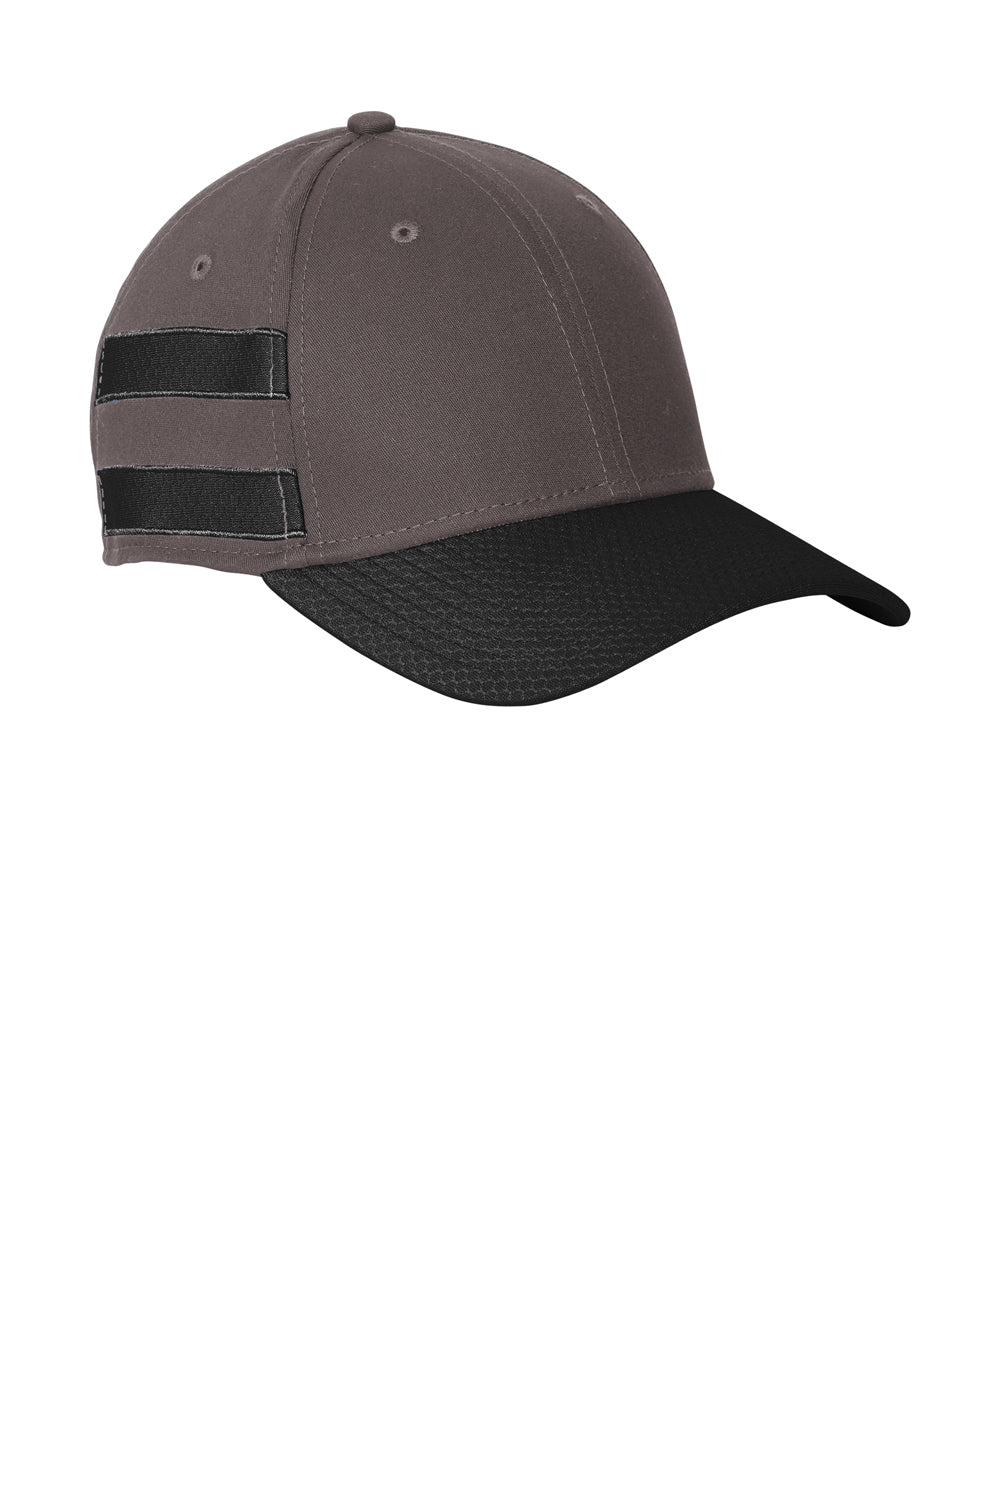 New Era NE1122 Striped Stretch Fit Hat Graphite Grey/Black Back